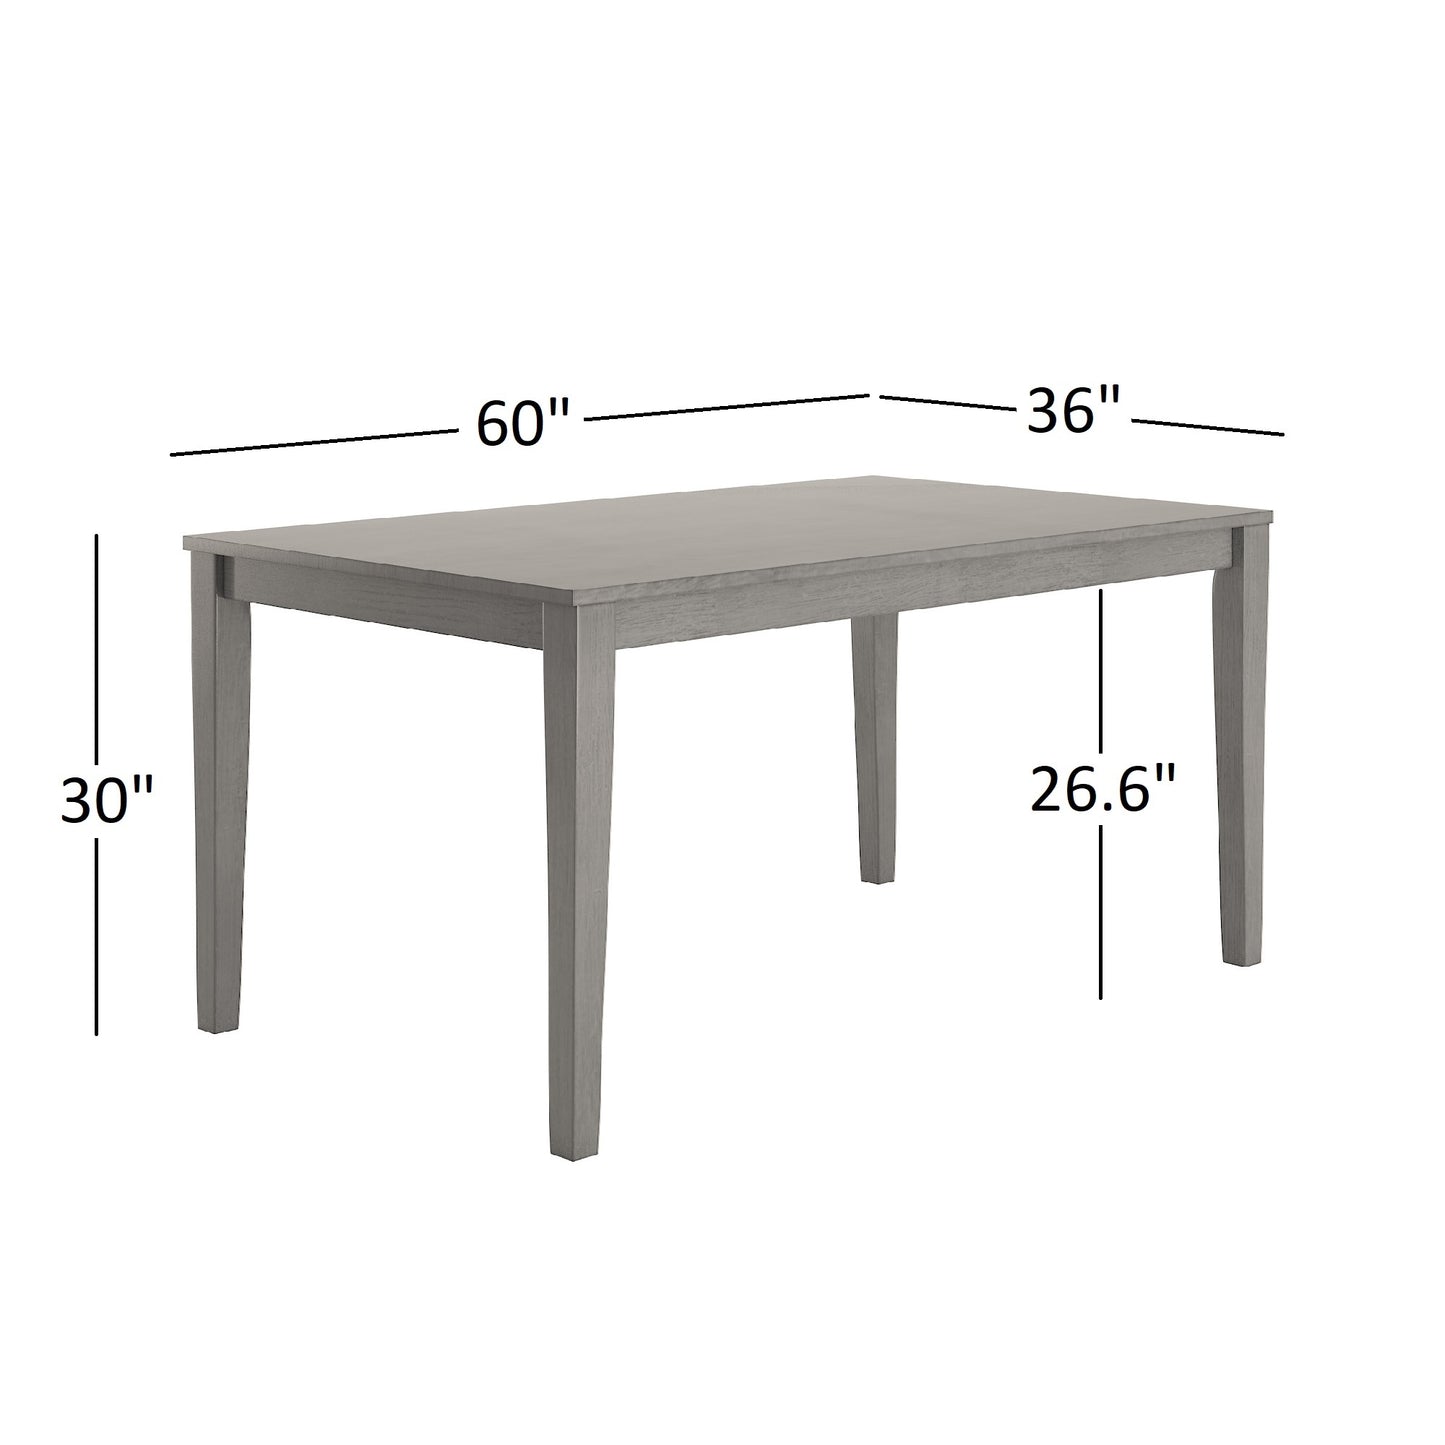 60-inch Rectangular Dining Table - Antique Grey Finish